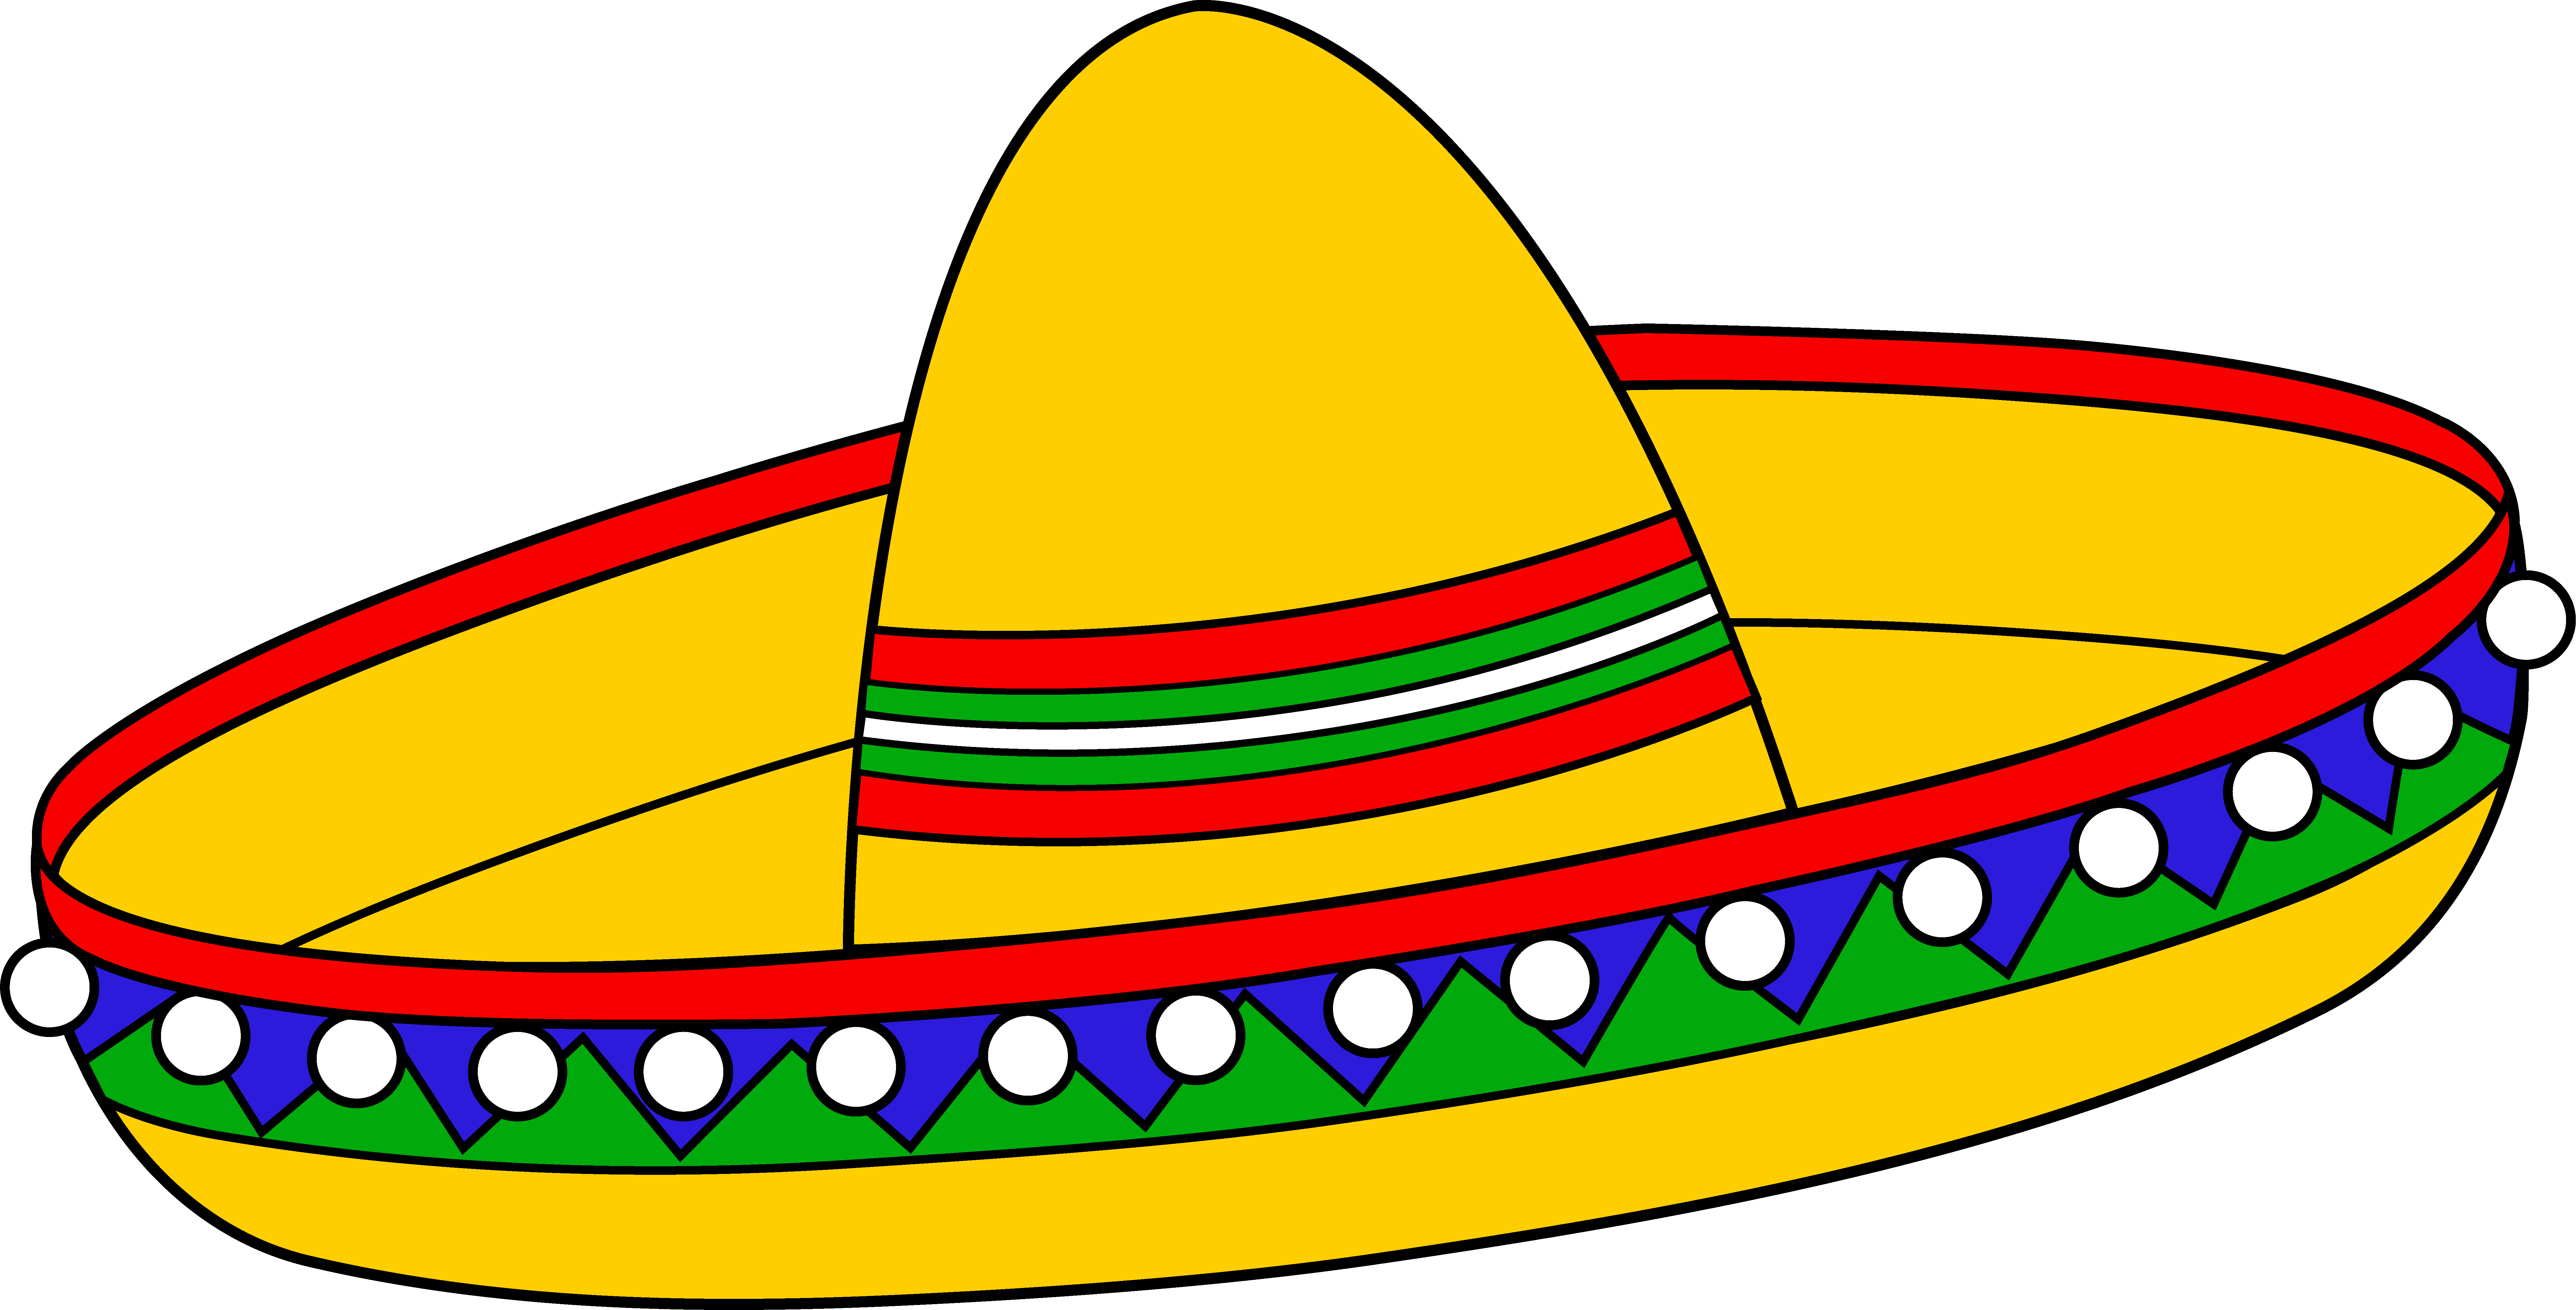 Colorful mexican sombrero hat. Dance clipart fiesta